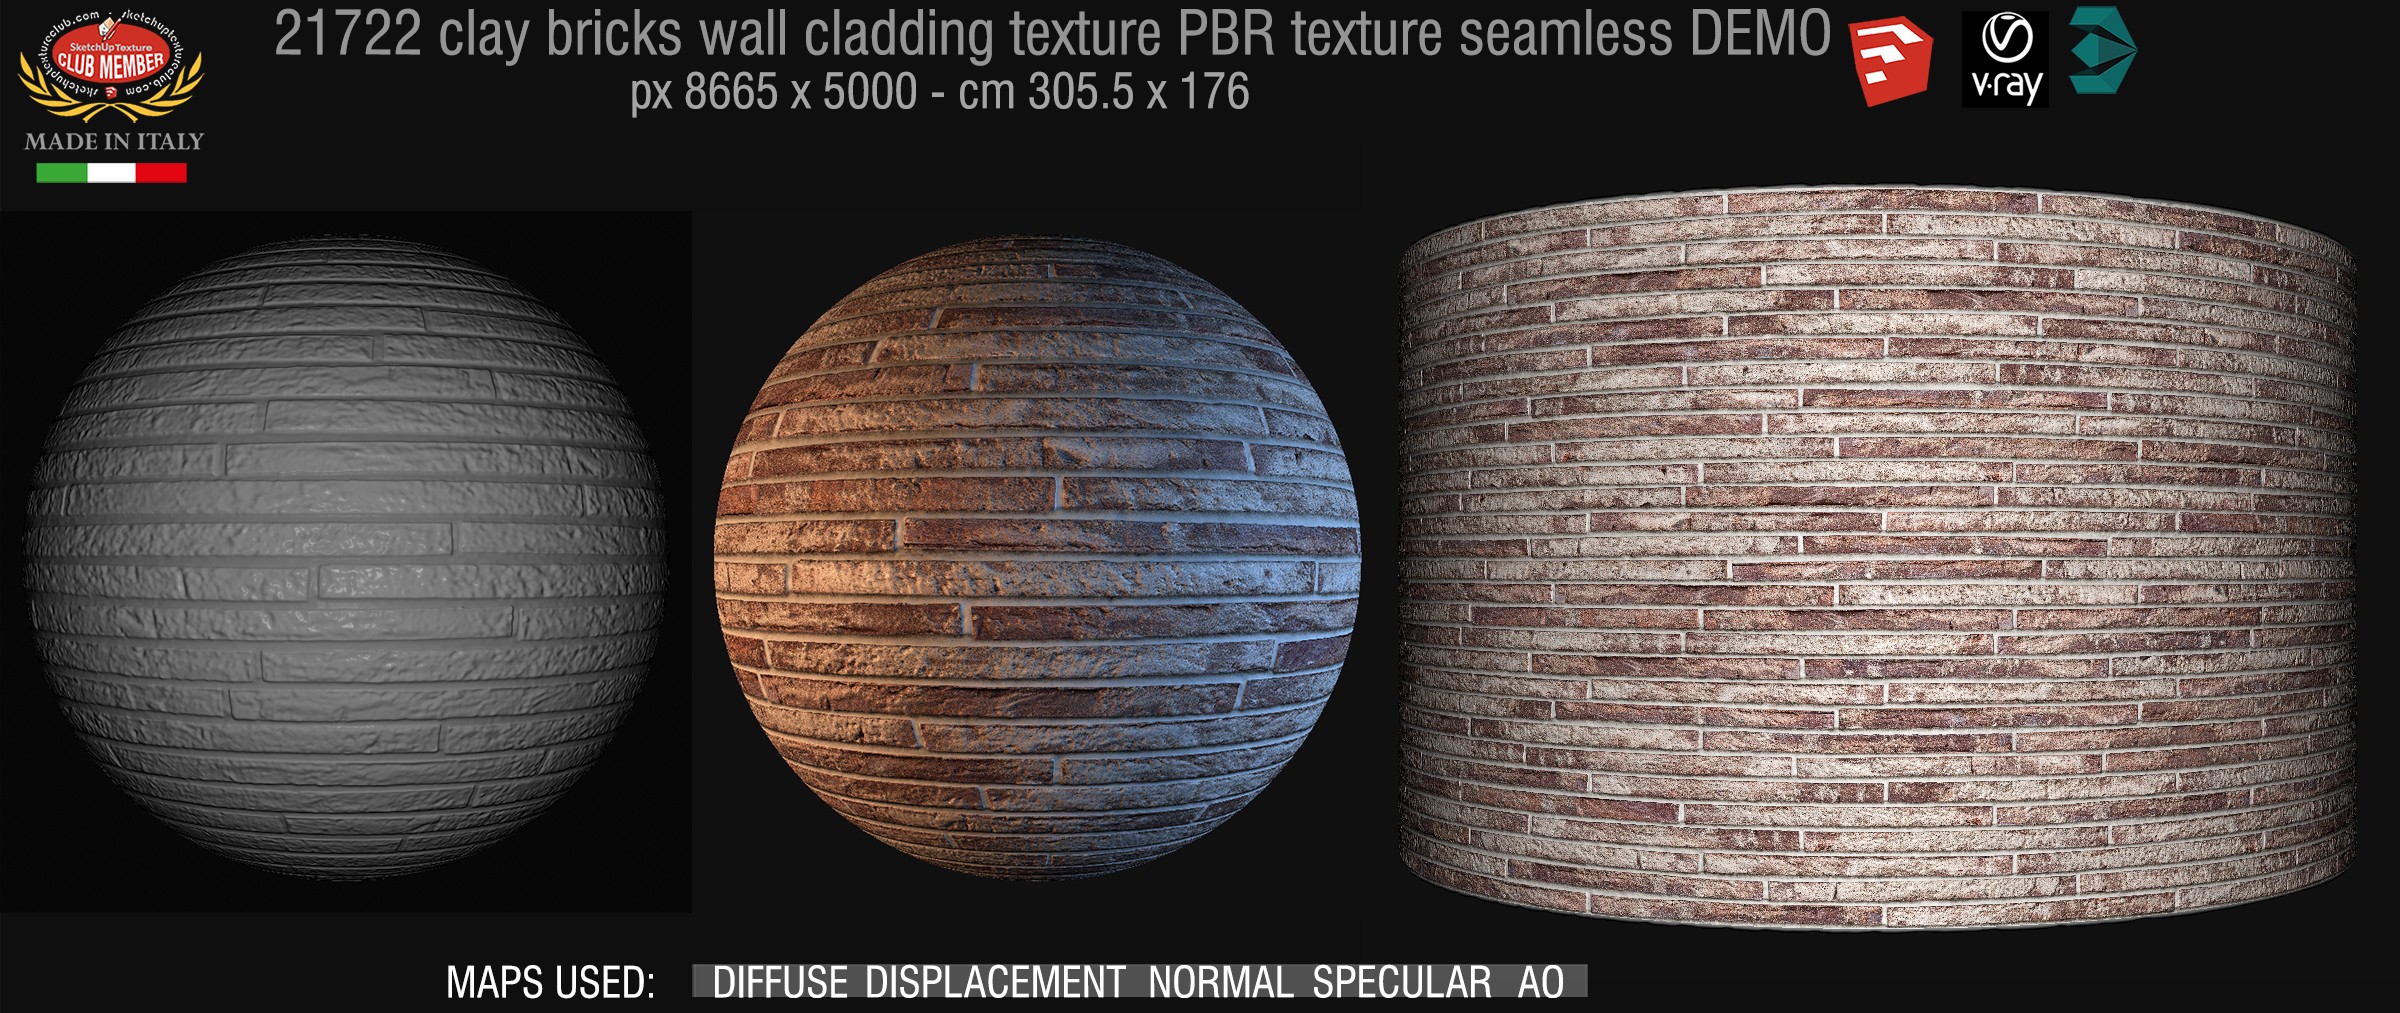 21722 Clay bricks wall cladding PBR texture seamless DEMO